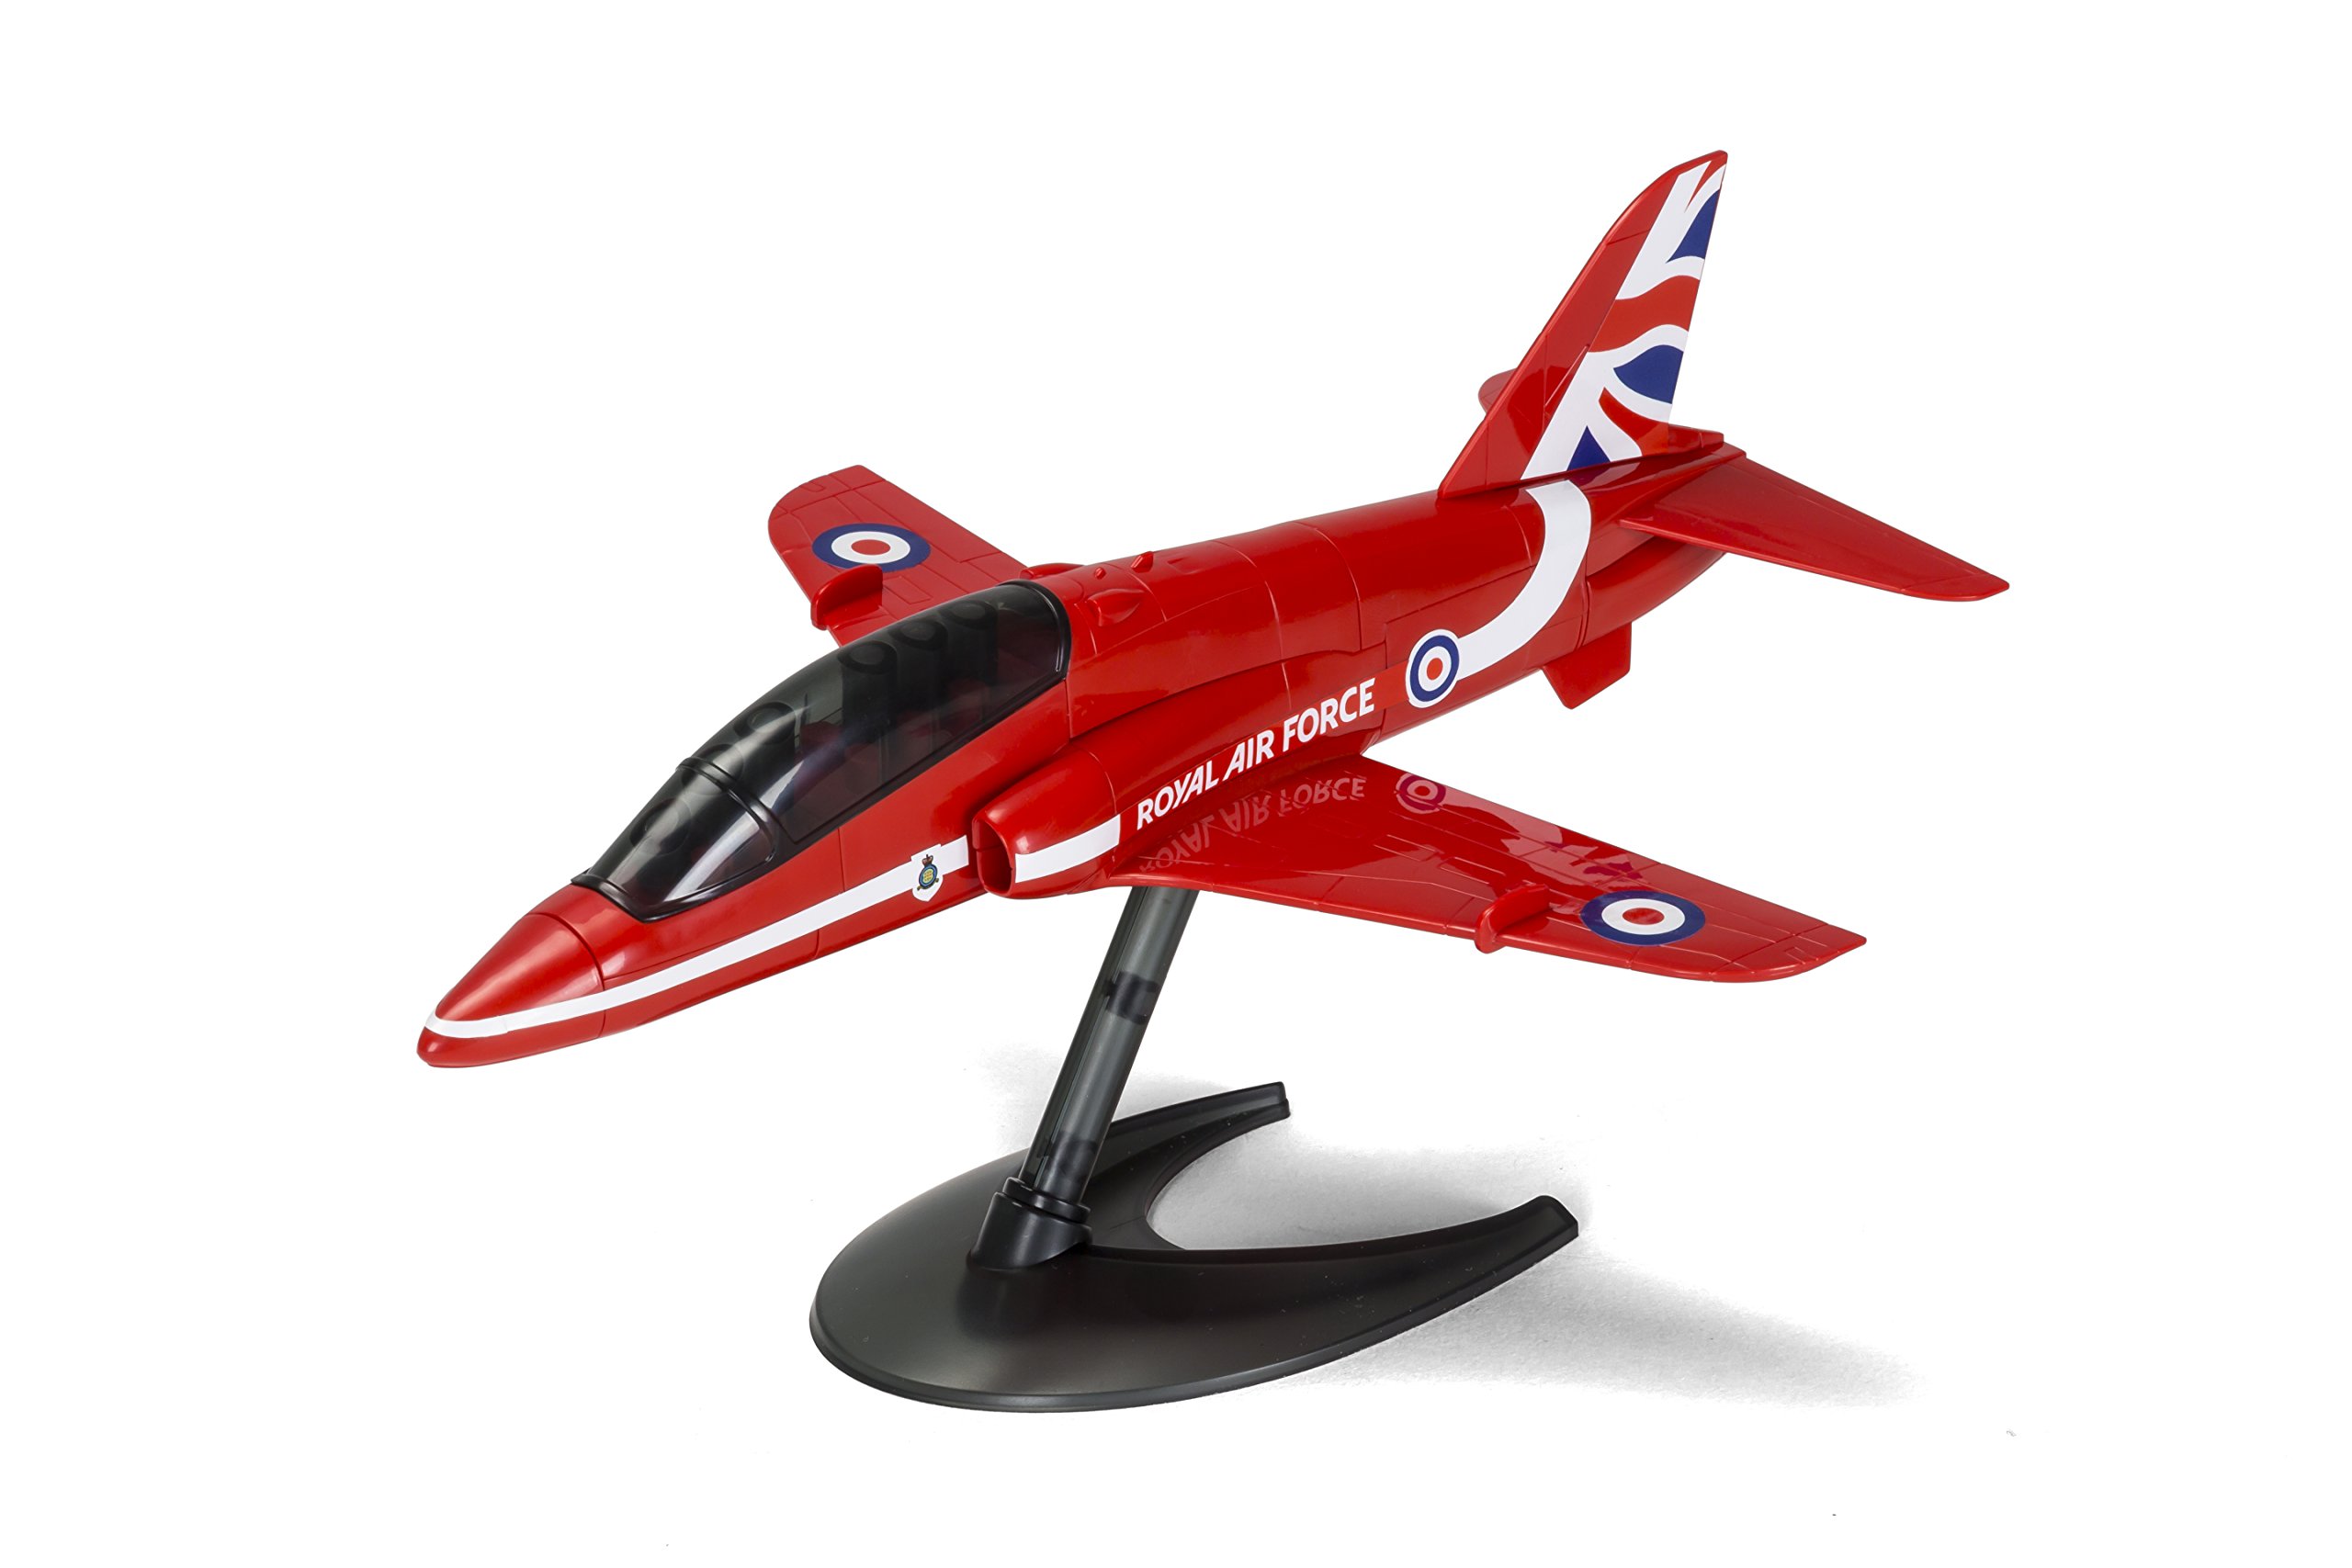 Airfix Quickbuild RAF Red Arrows Hawk Snap Together Plastic Model Kit J6018, Red & Black, 10 x 6 x 2 inches